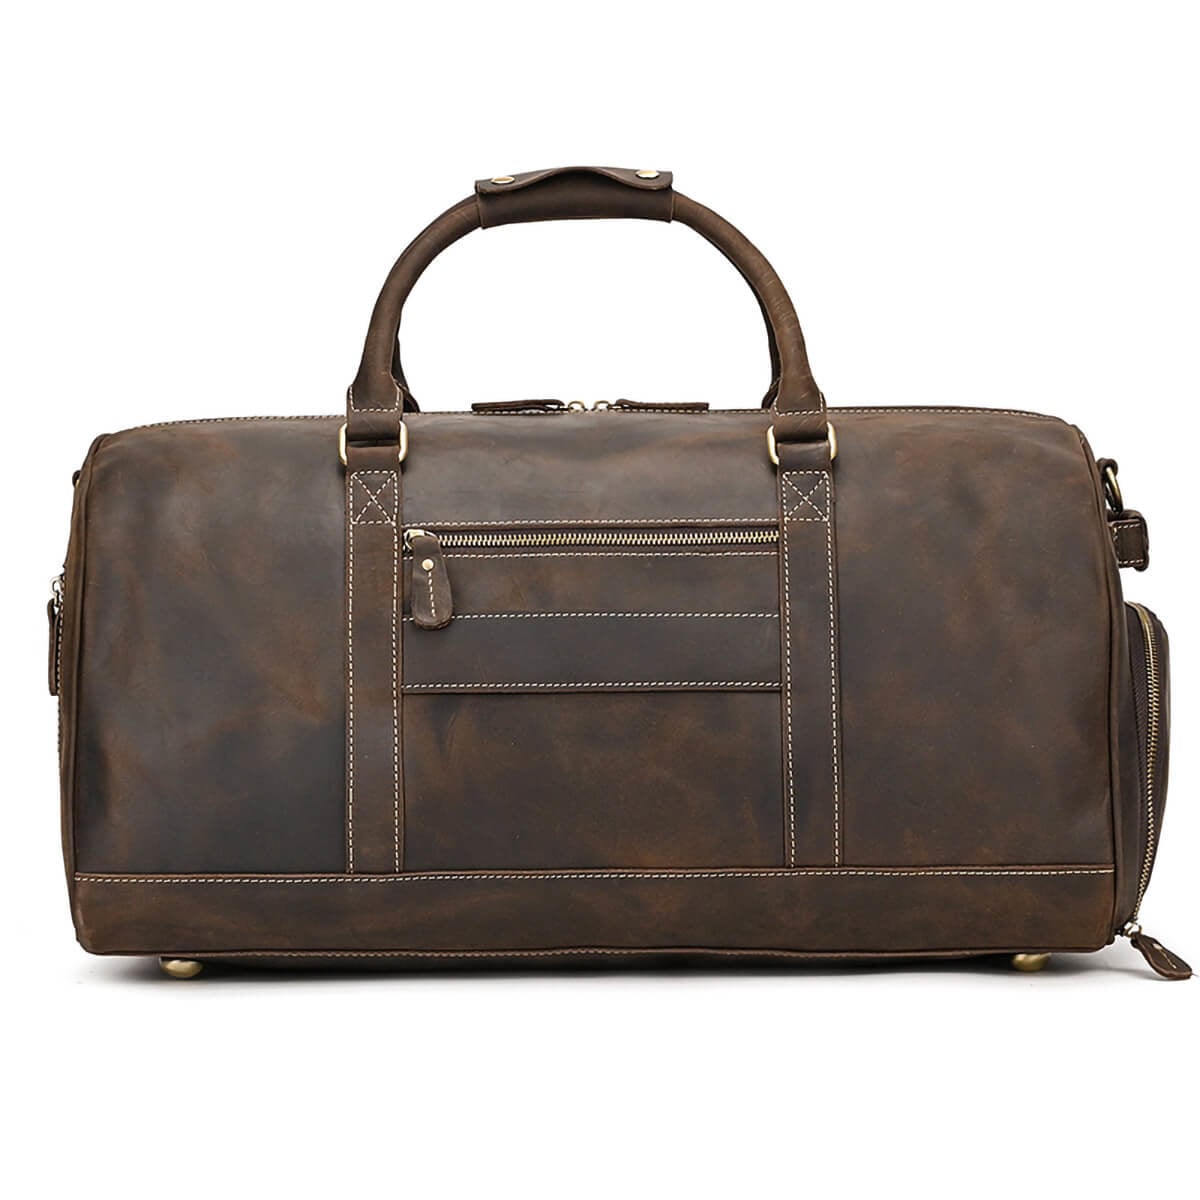 Luxury Handbag for Travel